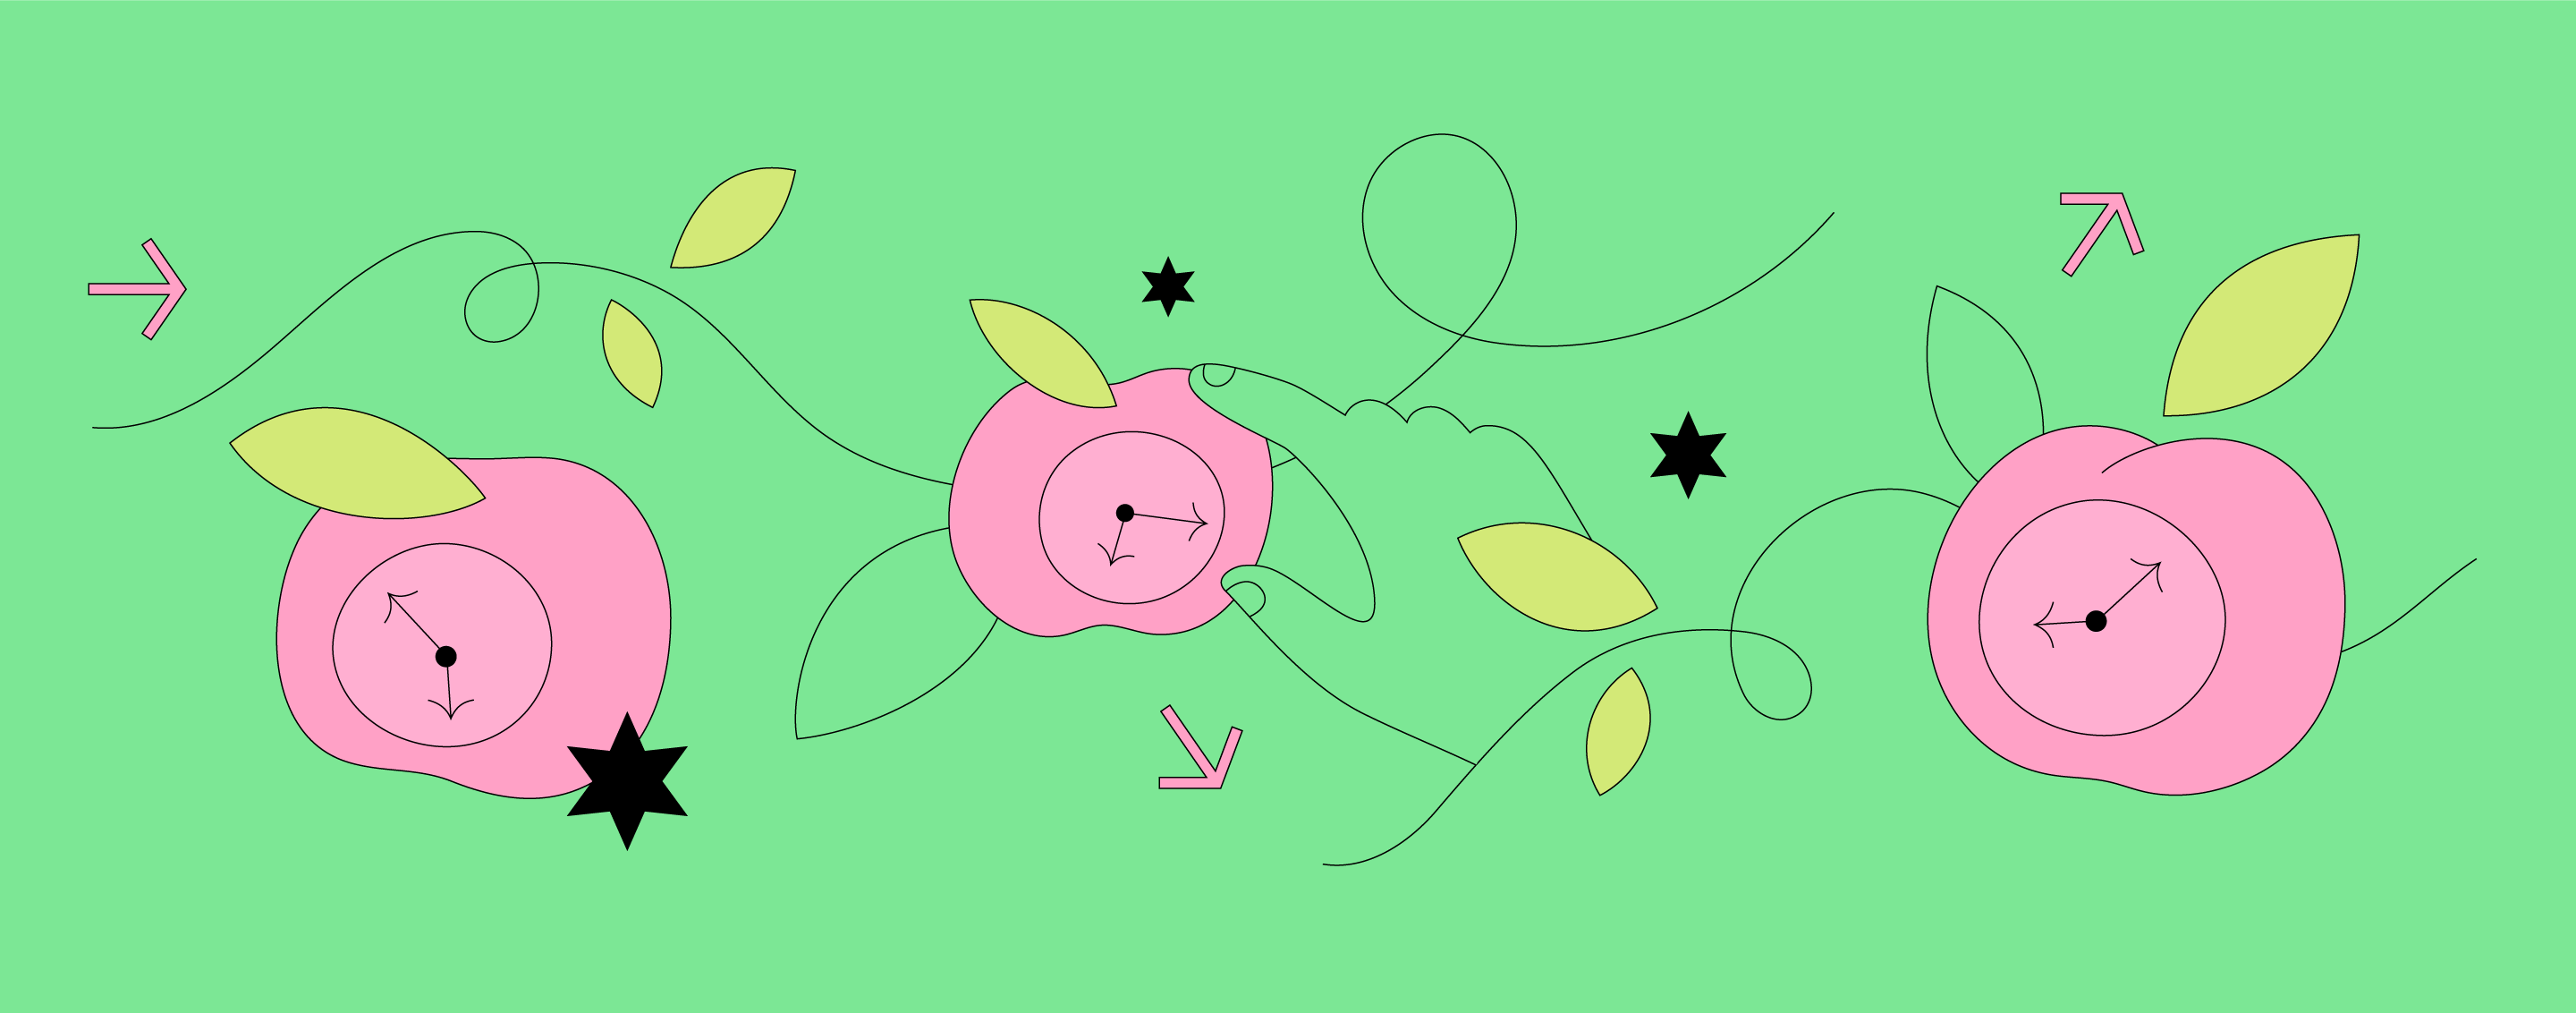 Cartoon graphic of apple-shaped clocks, leaves and stars.